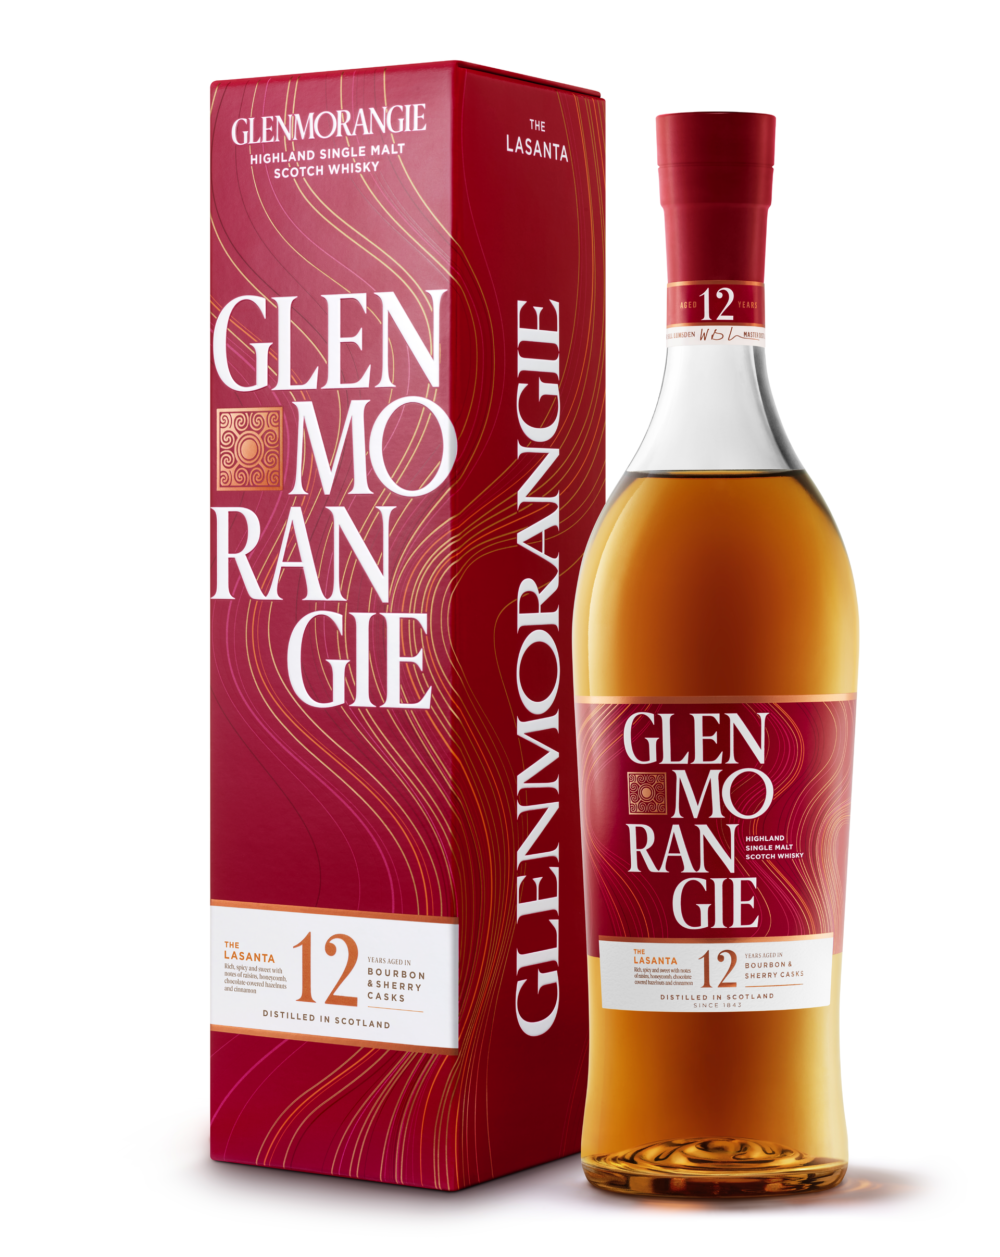 Glenmorangie Lasanta 12 YO — szkocka whisky single malt z regionu Highlands, butelka 700 ml, pudełko.